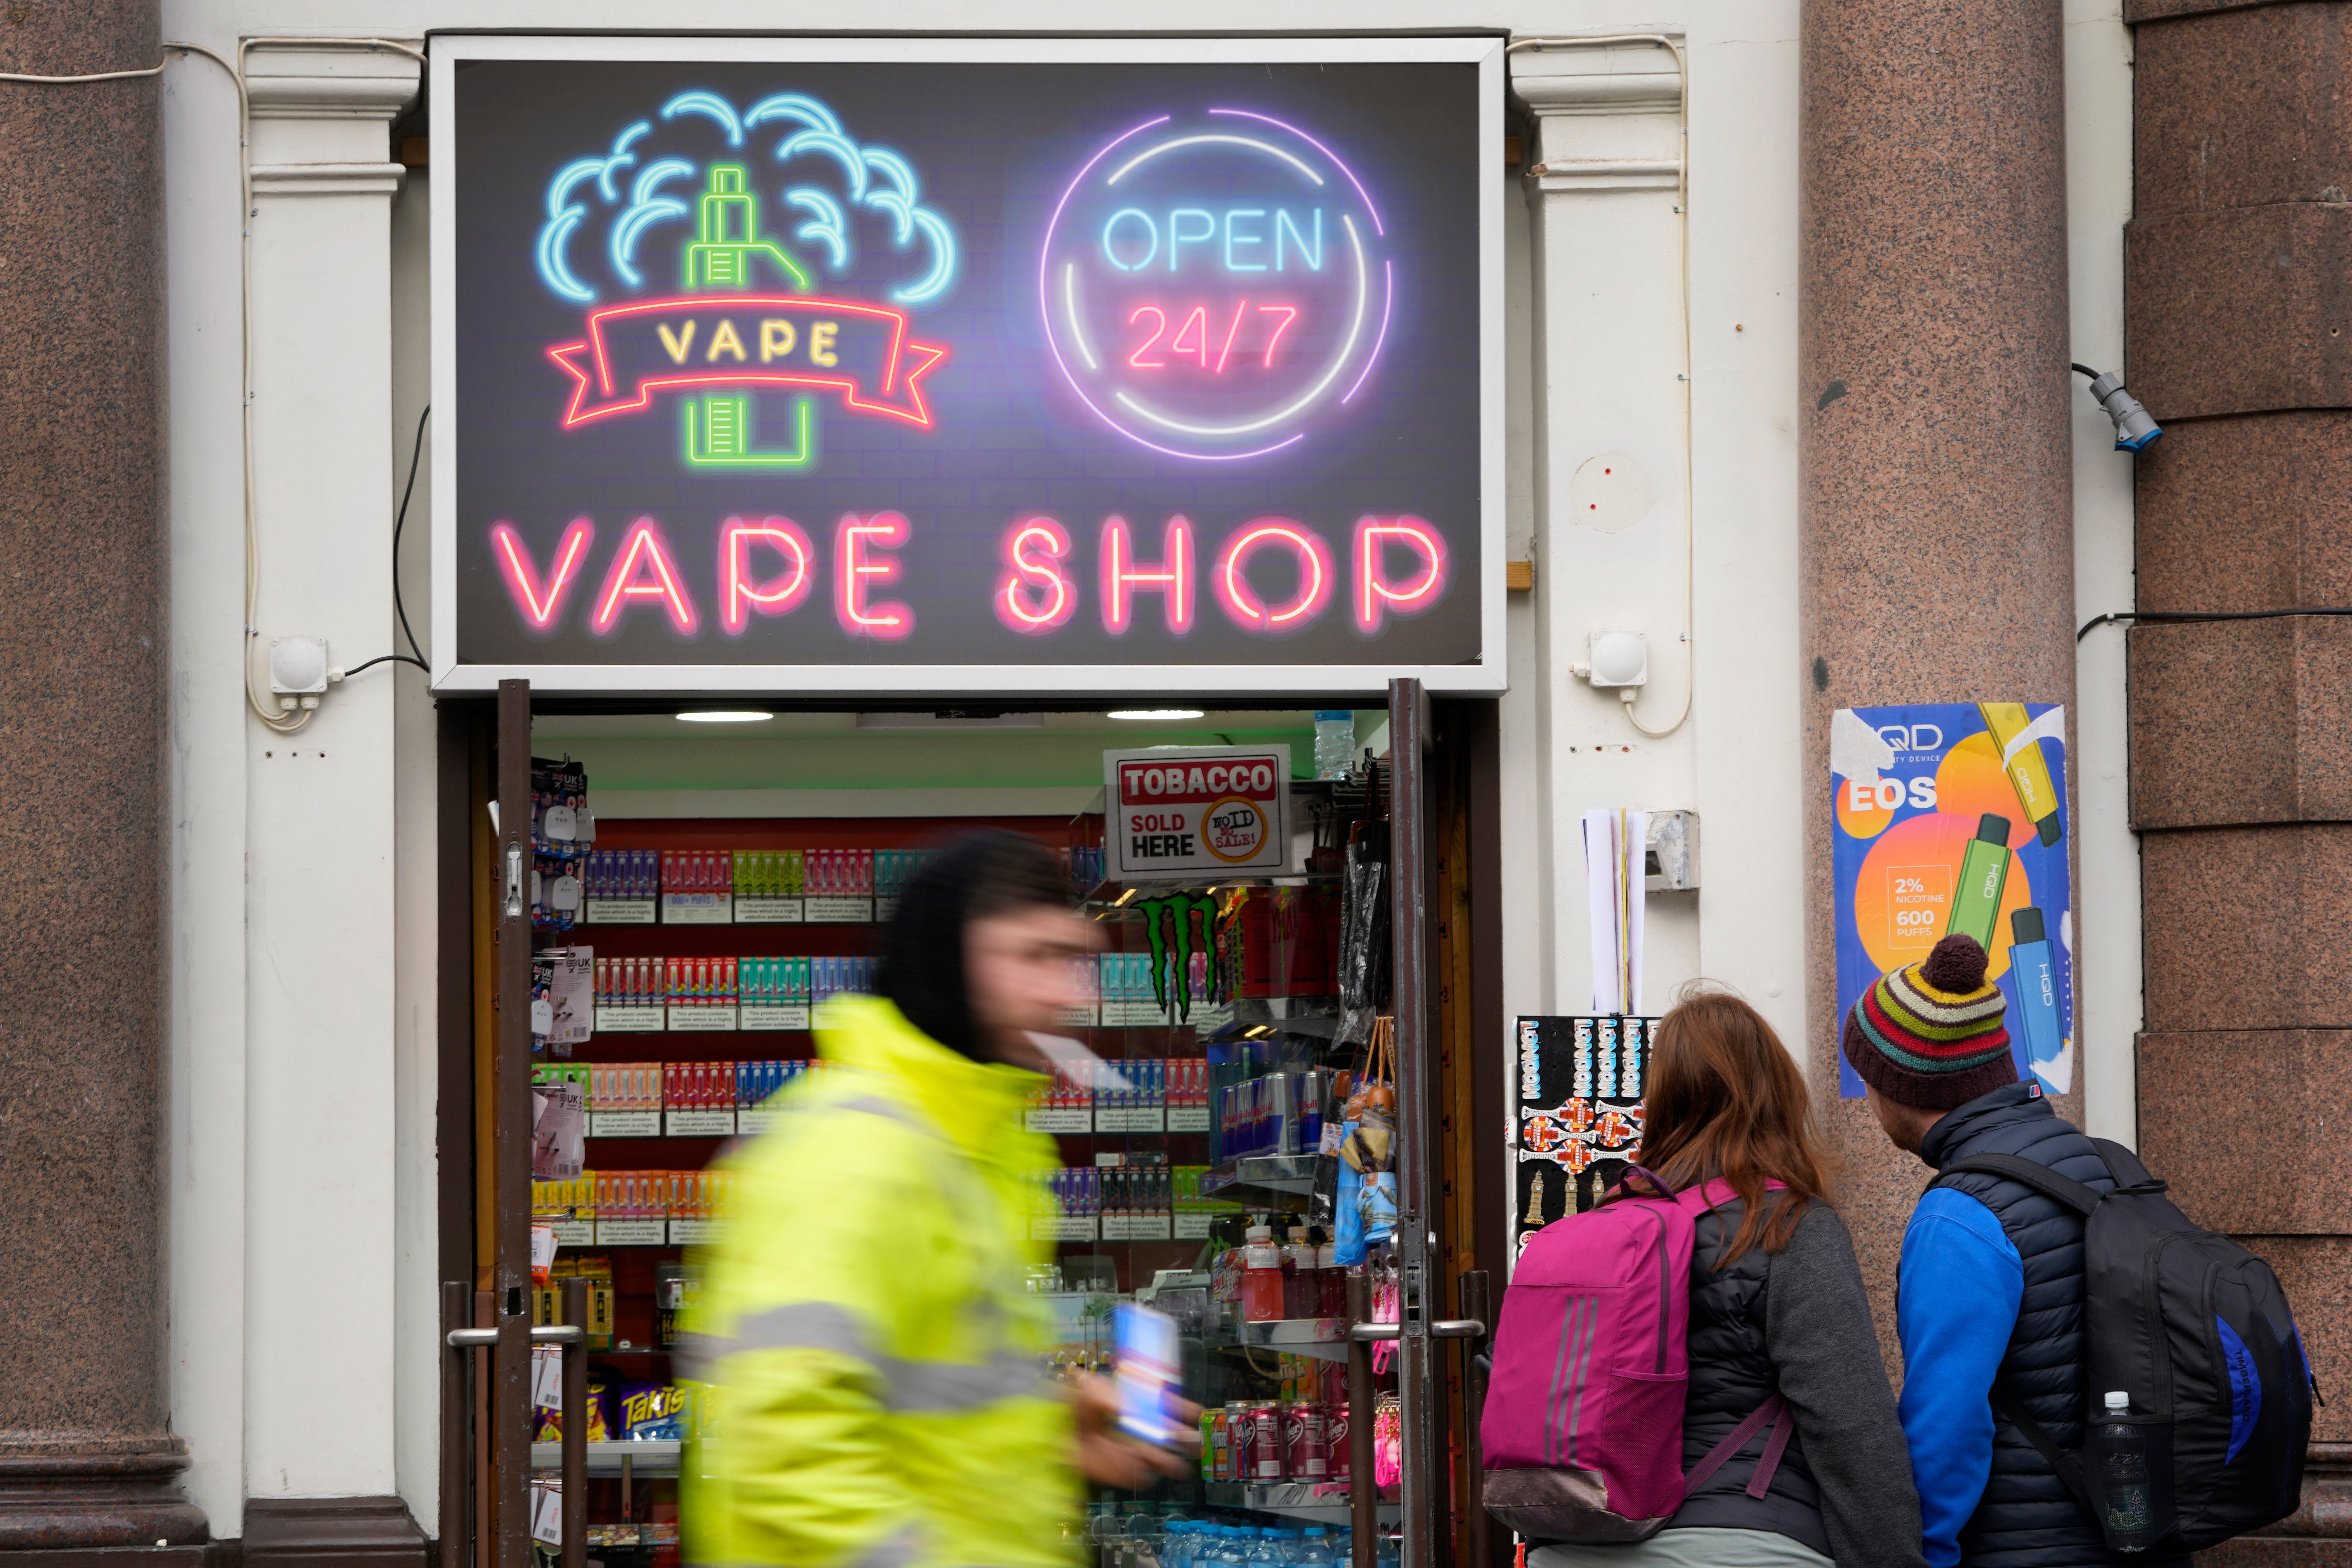 Vape shop in London